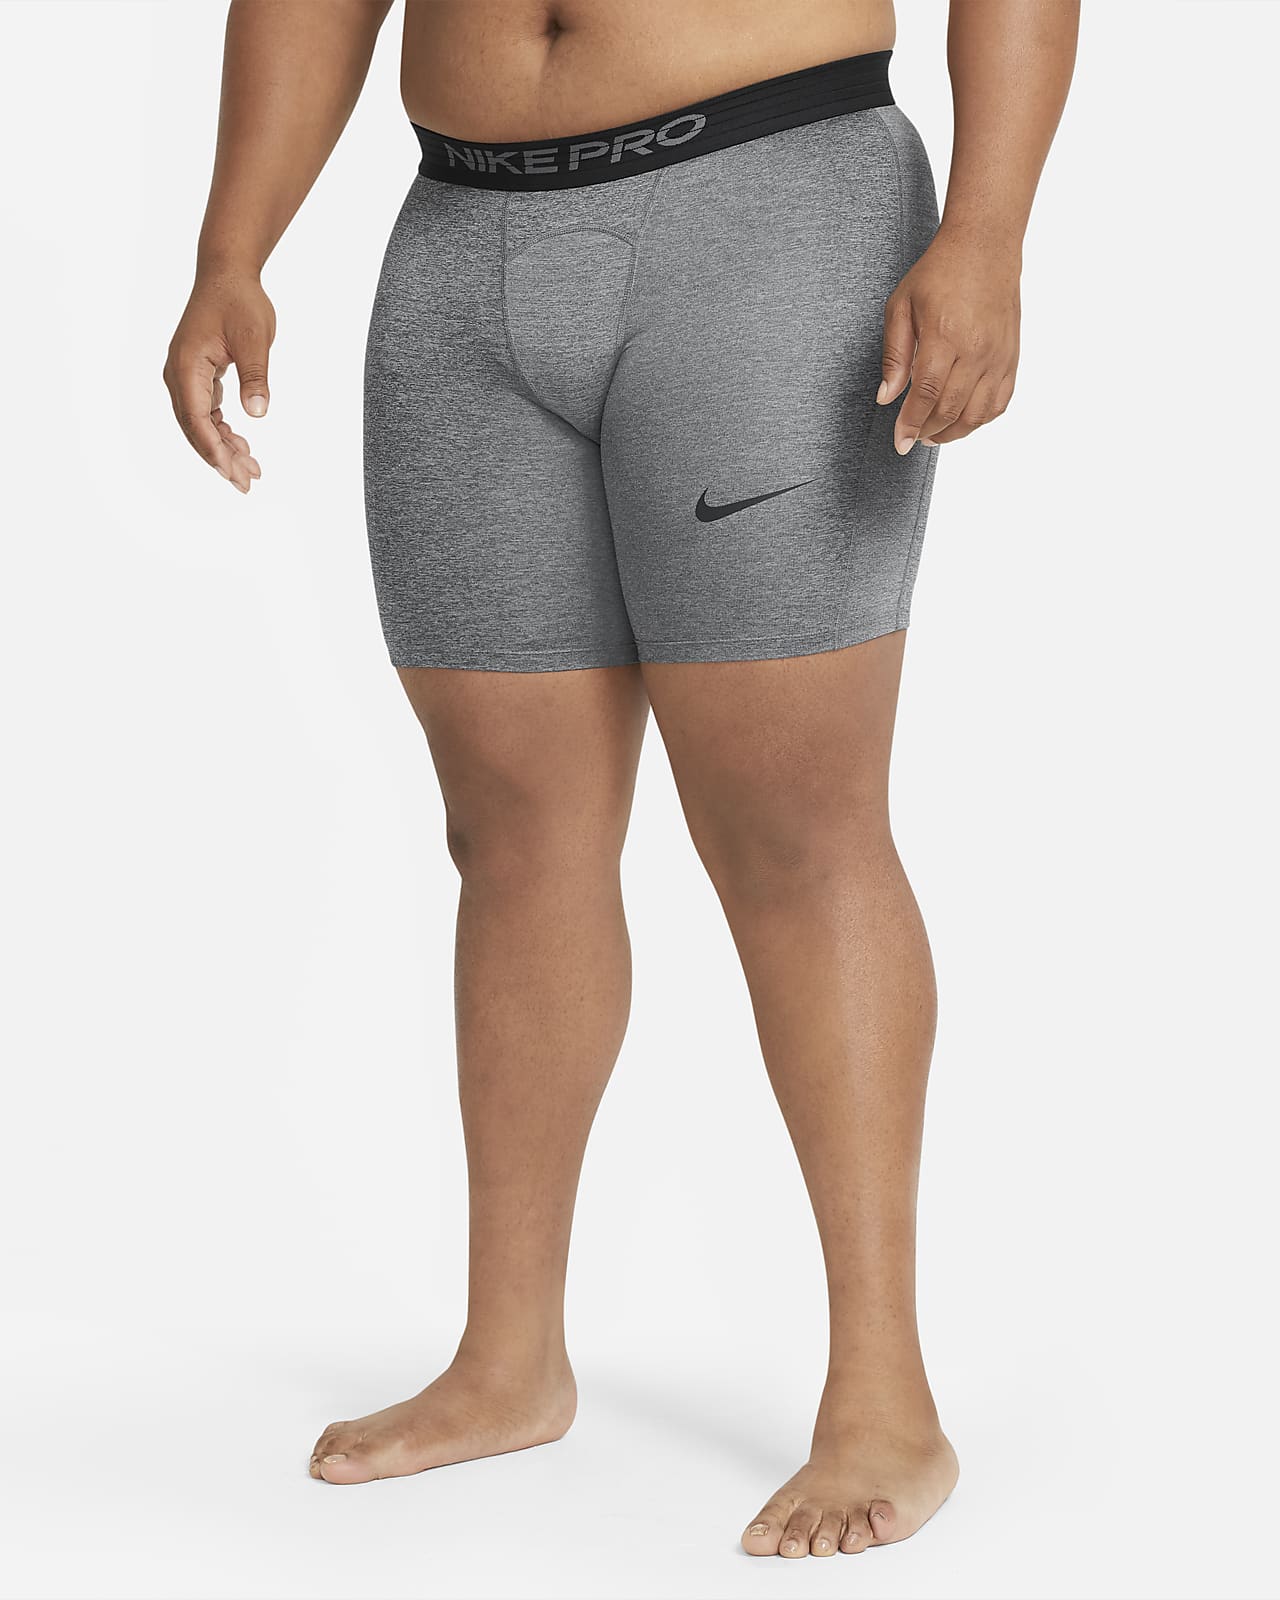 nike pro 7 inch compression shorts